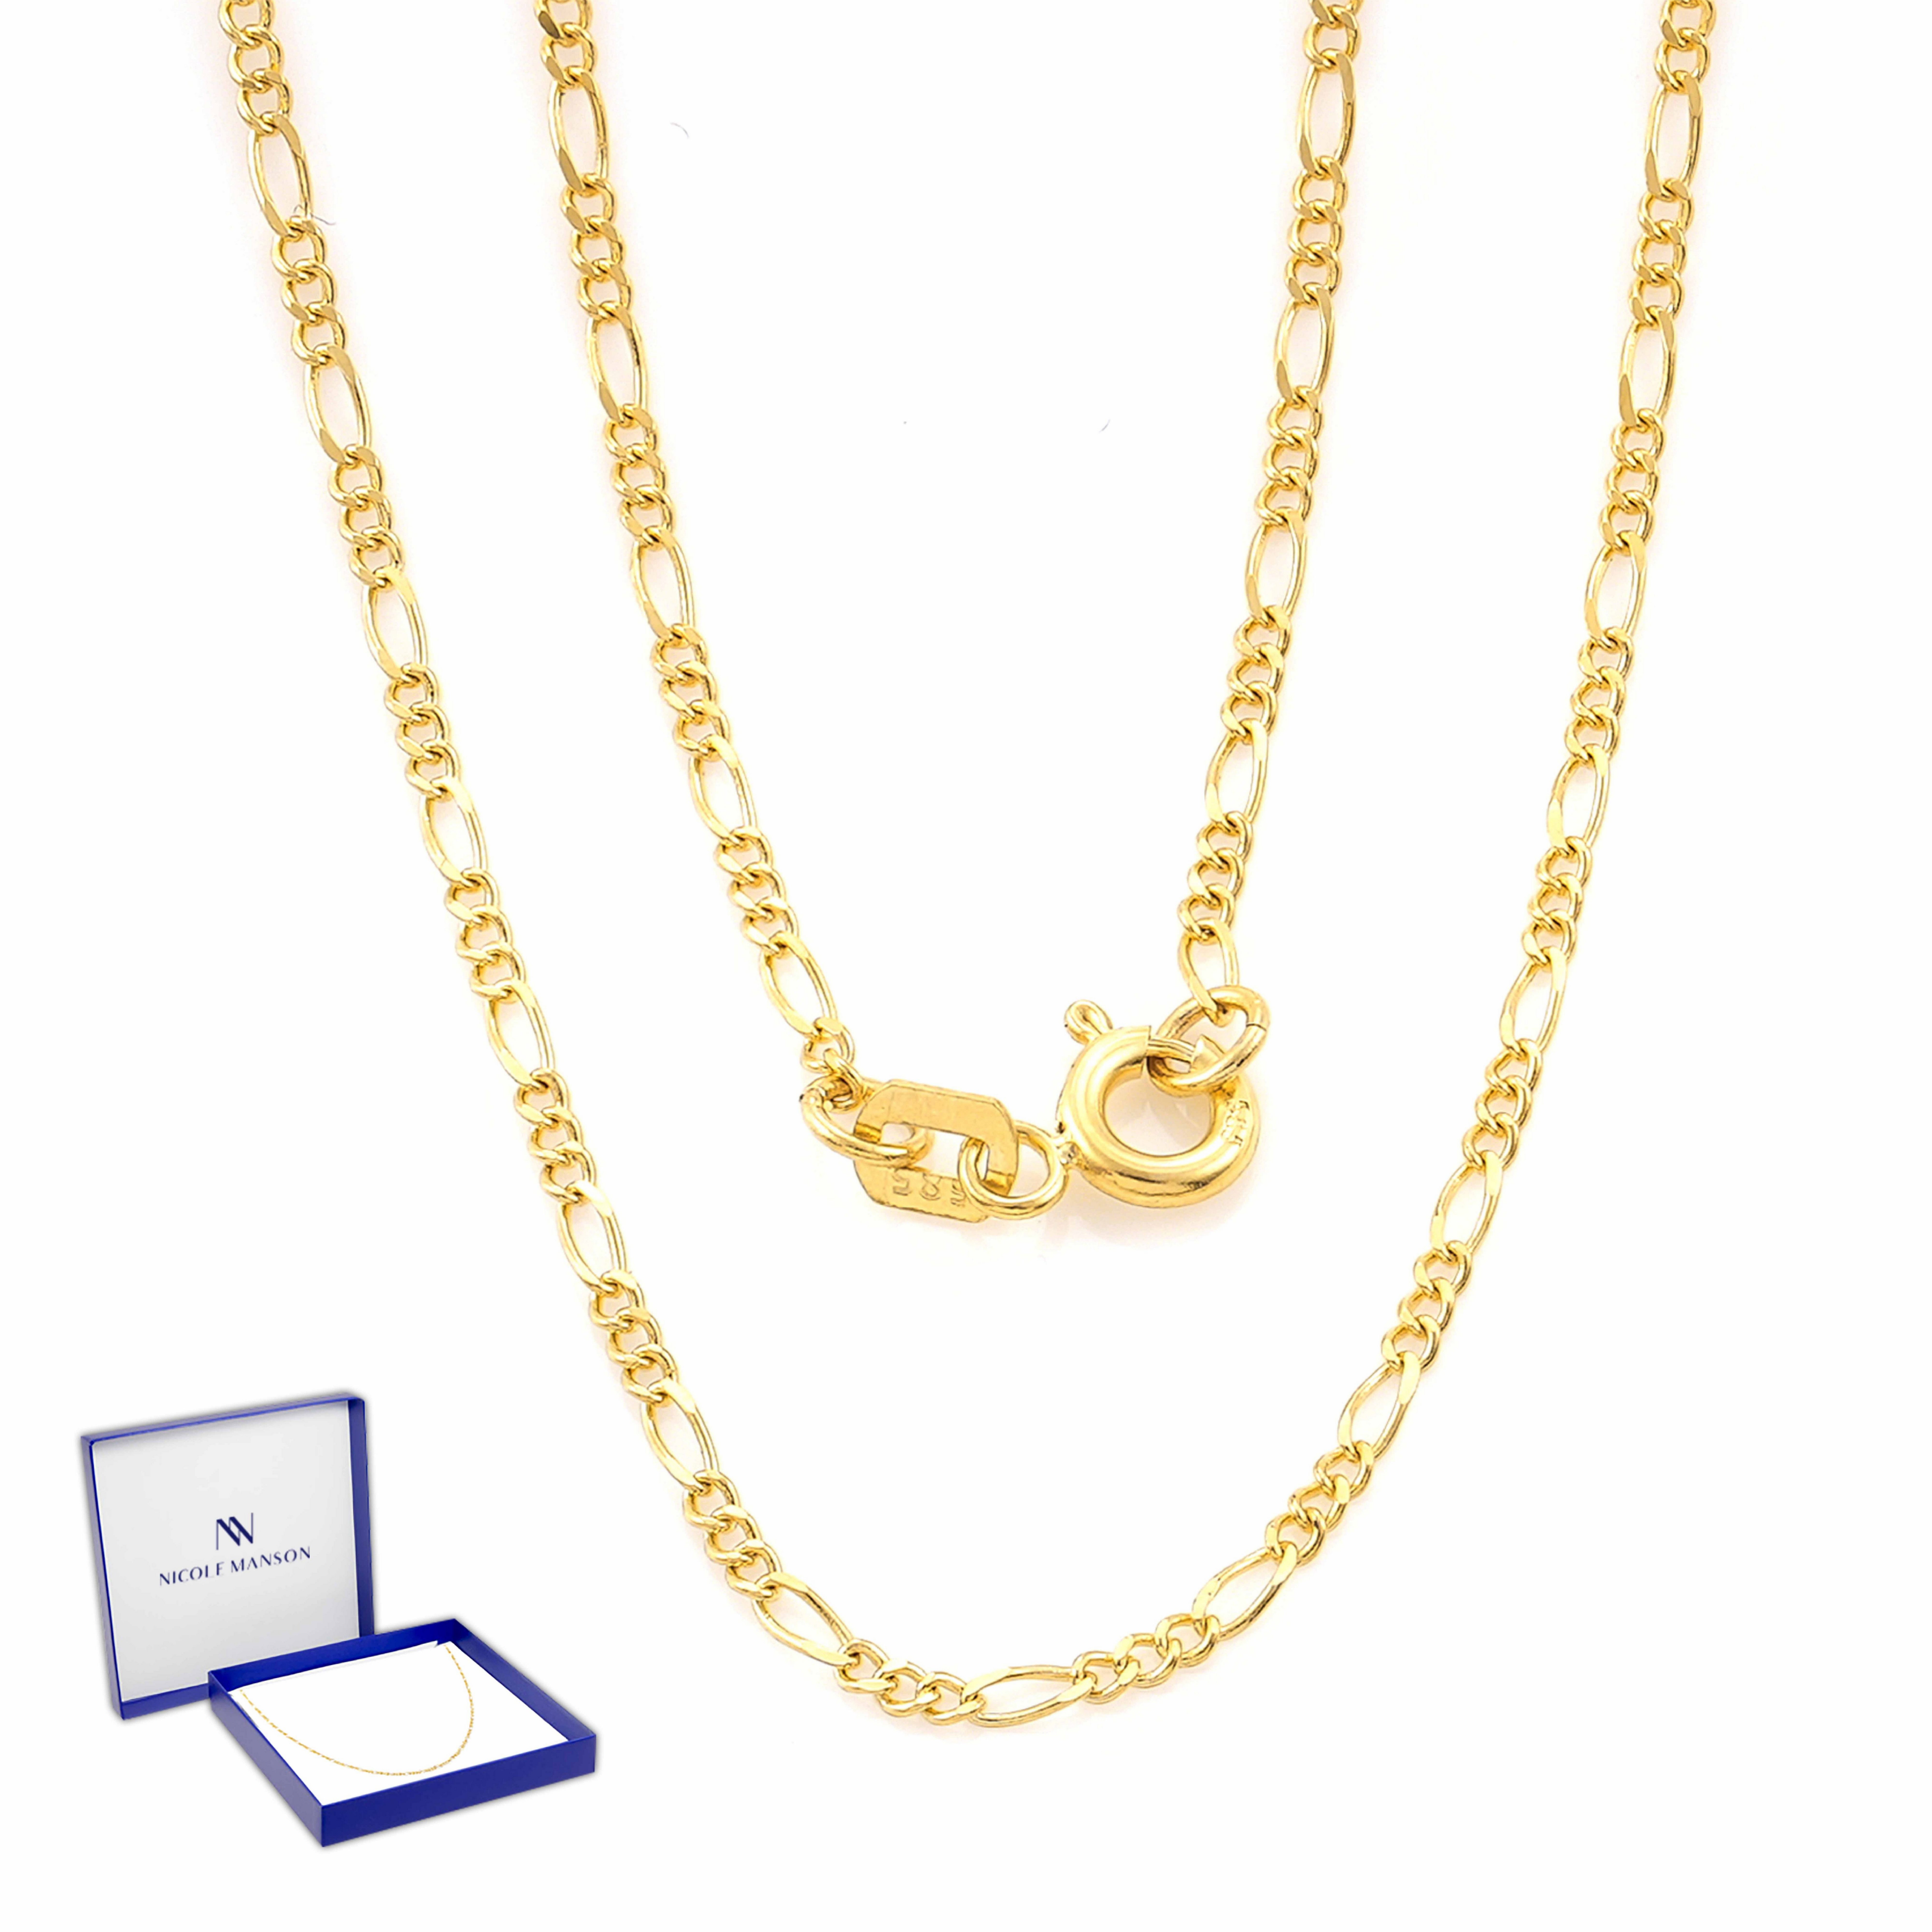 Nicole Manson Goldkette 585 Gold Ketten 14K 40cm - 60cm, Figarokette | Ketten ohne Anhänger